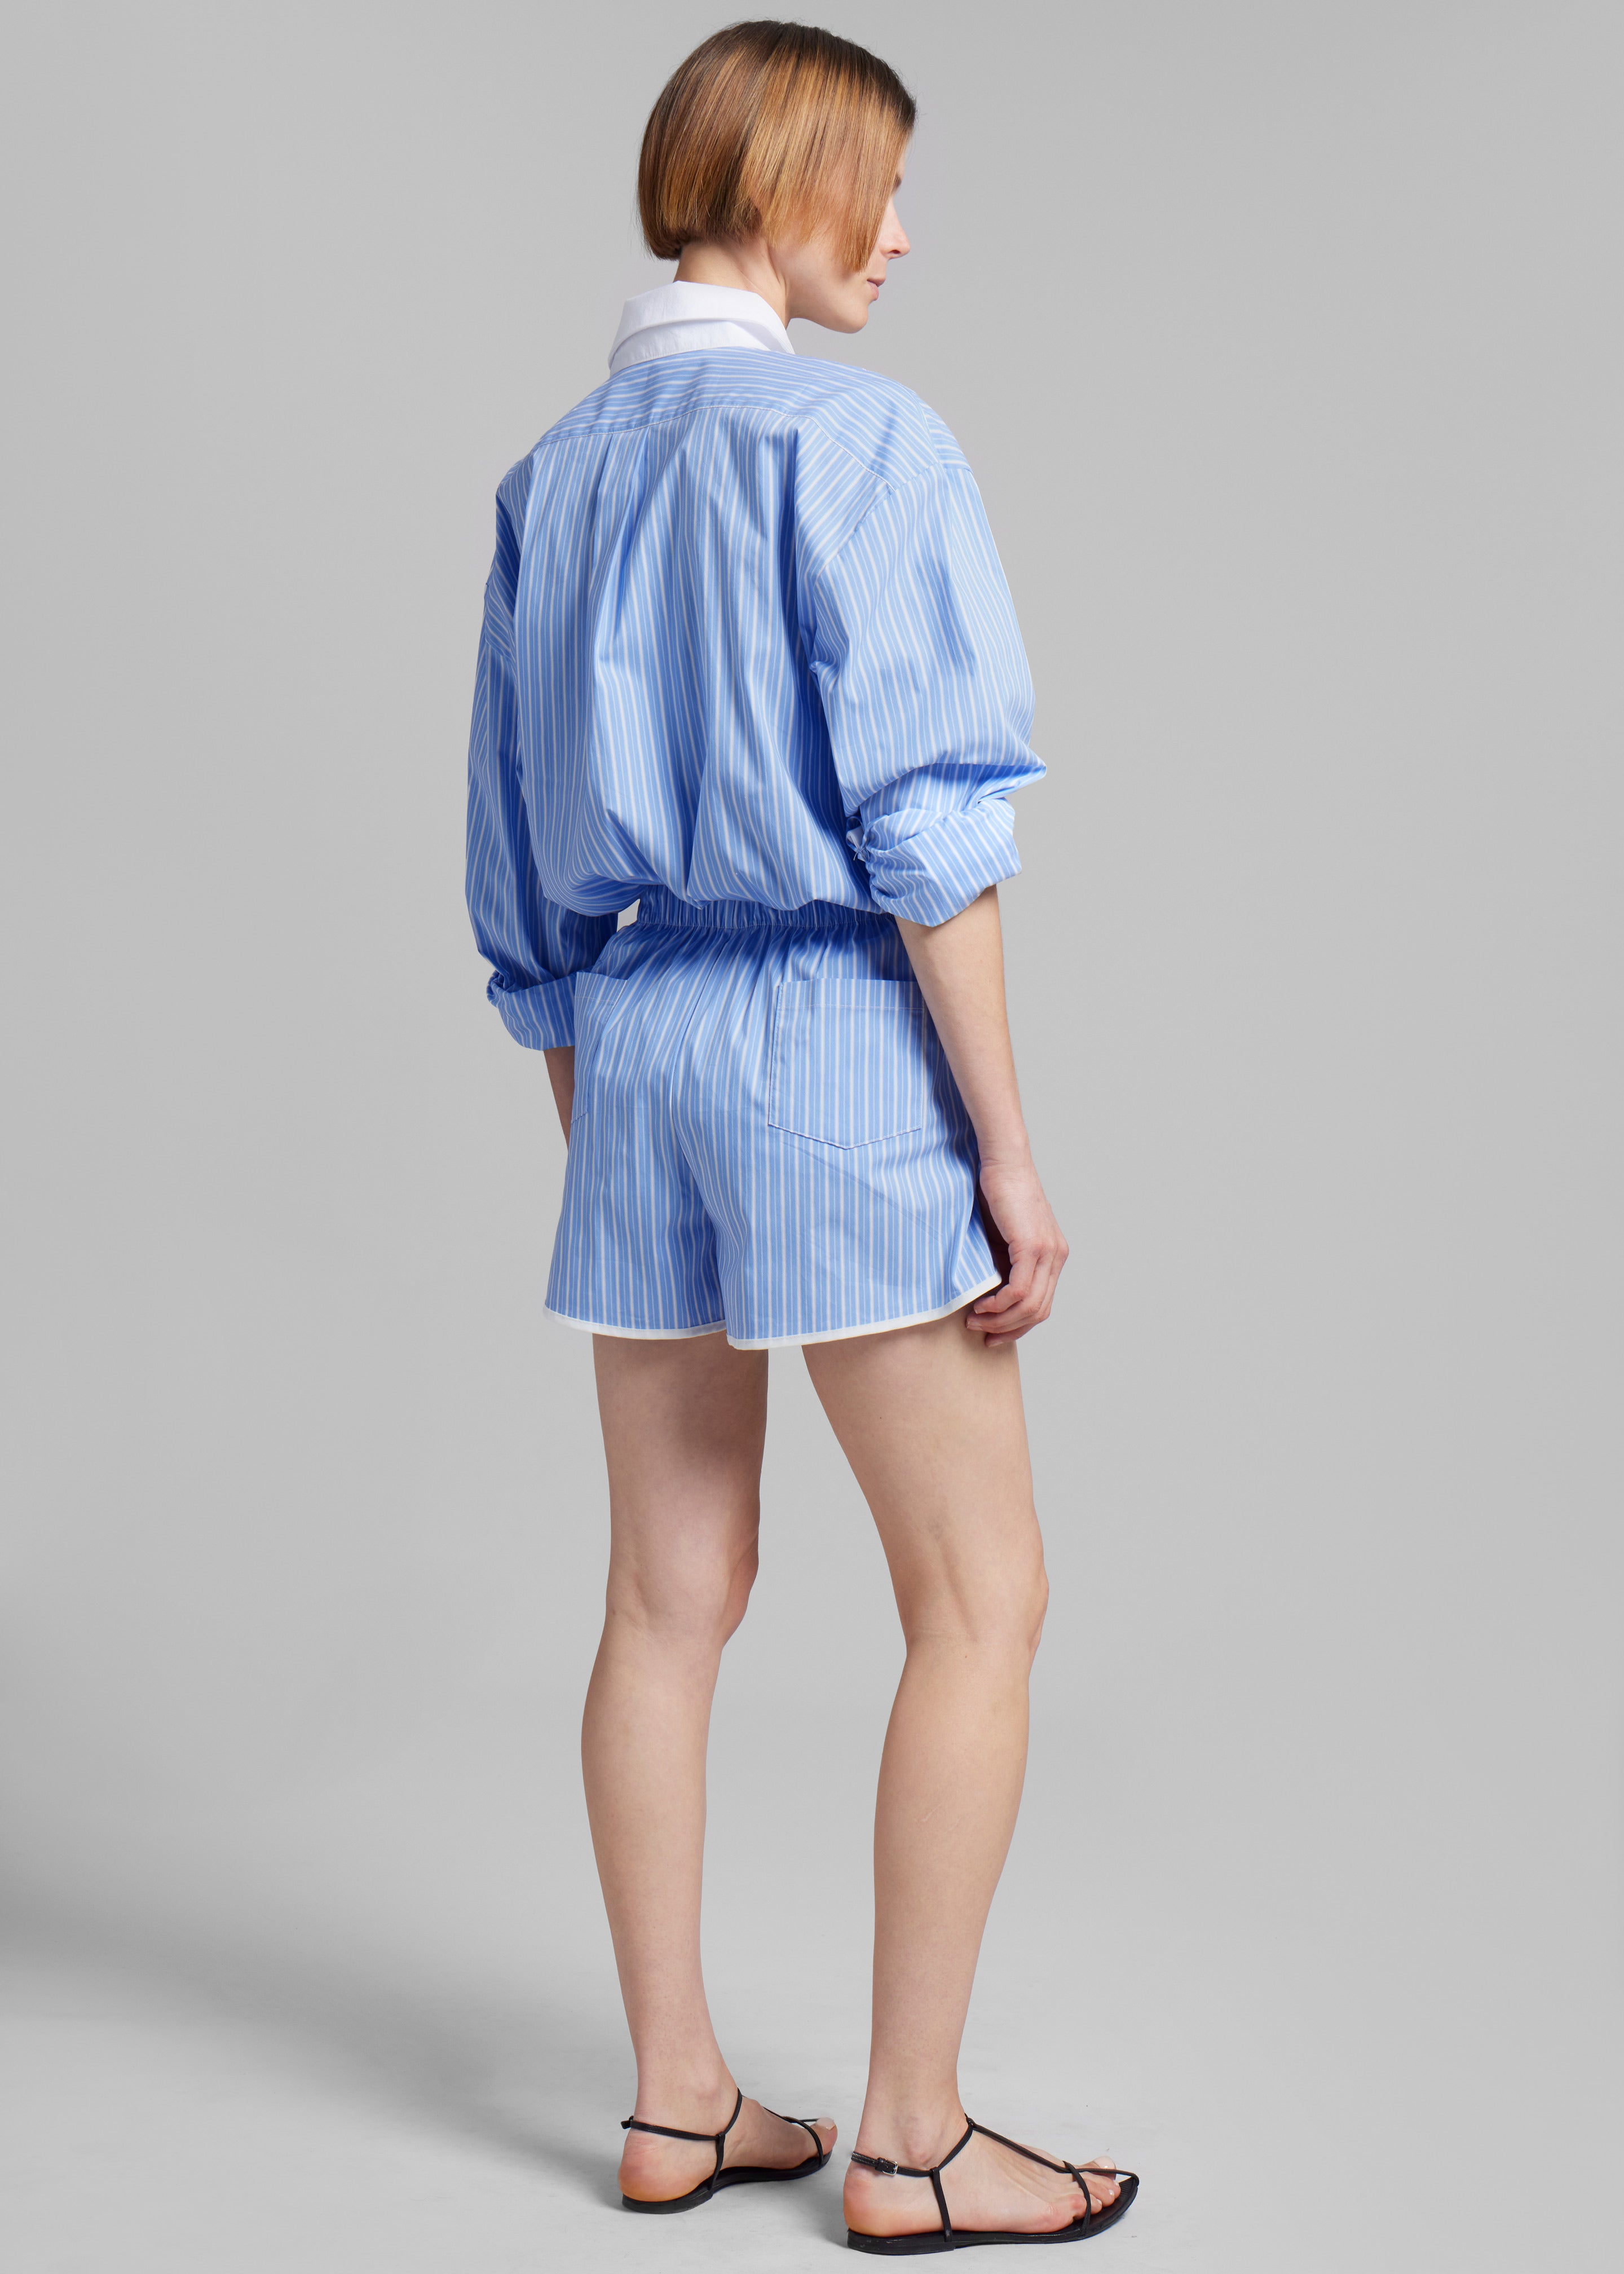 Orla Button Up Shirt - Blue/White Stripe - 9